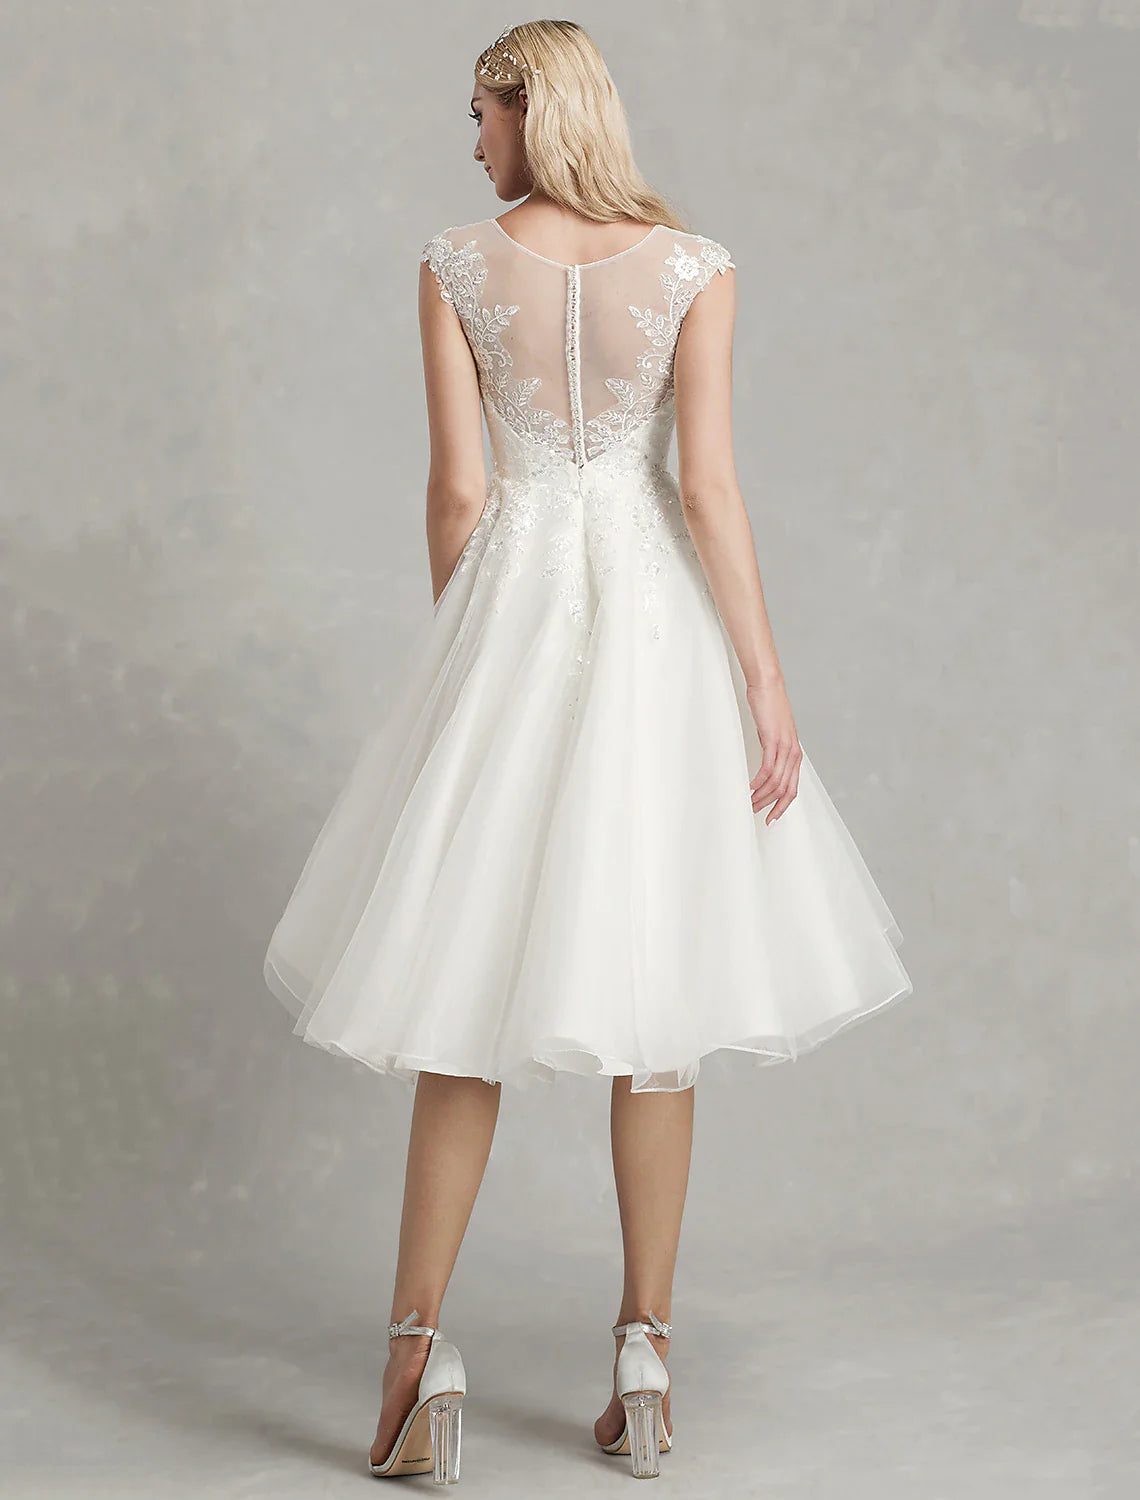 Reception Little White Dresses Wedding Dresses A-Line Illusion Neck Cap Sleeve Knee Length Lace Bridal Gowns With Appliques